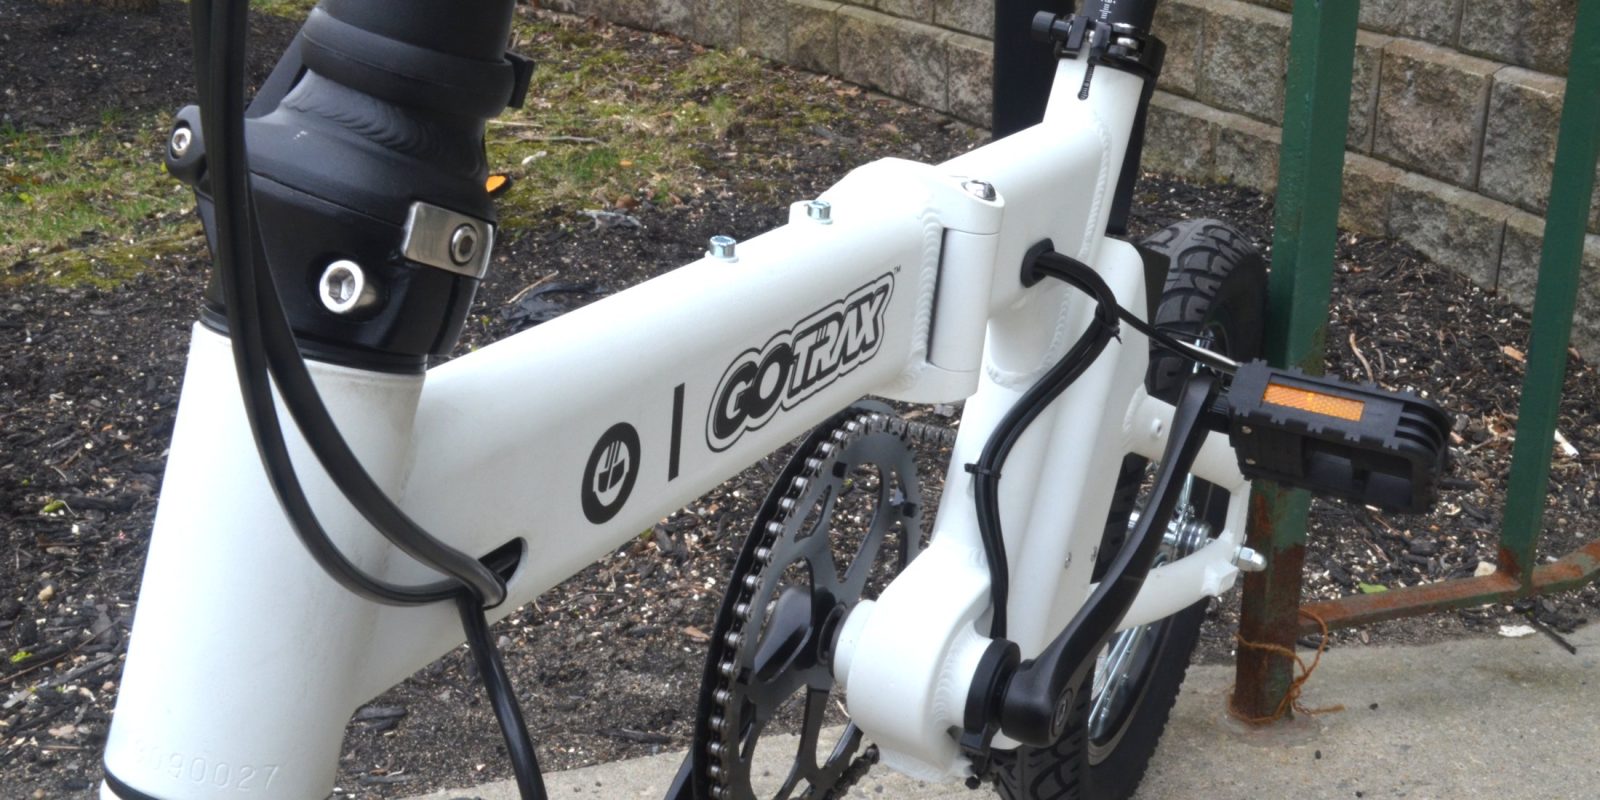 Review: GOTRAX Shift S1 folding e-bike is a fun little $799 commuter electric bicycle